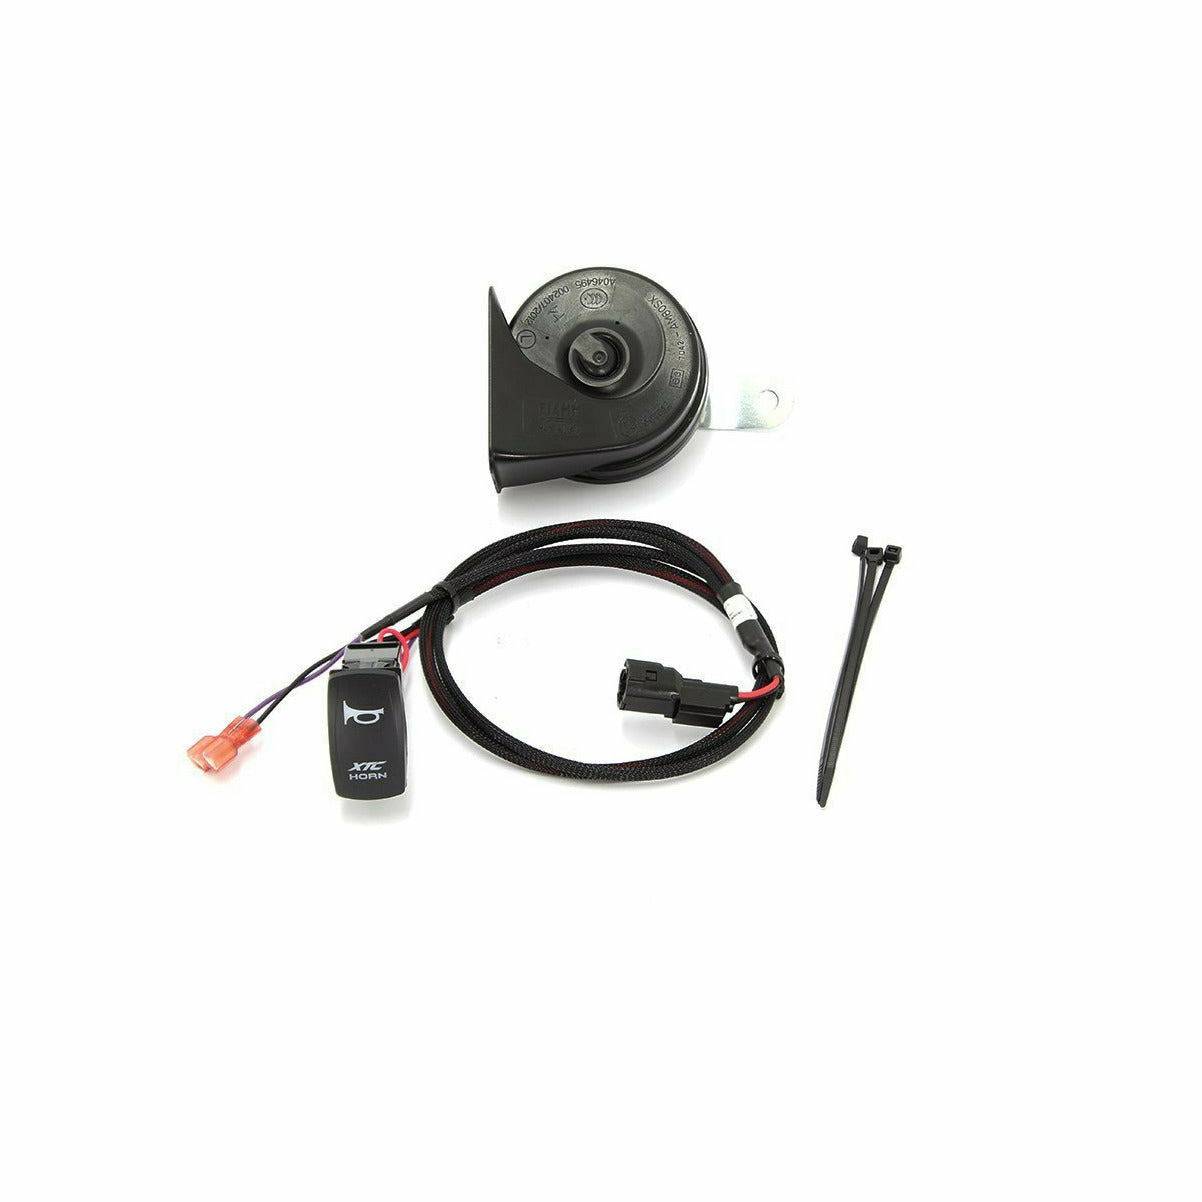 XTC Honda Talon Plug & Play Horn Kit, Laser Engraved Rocker Switch with Amber LED